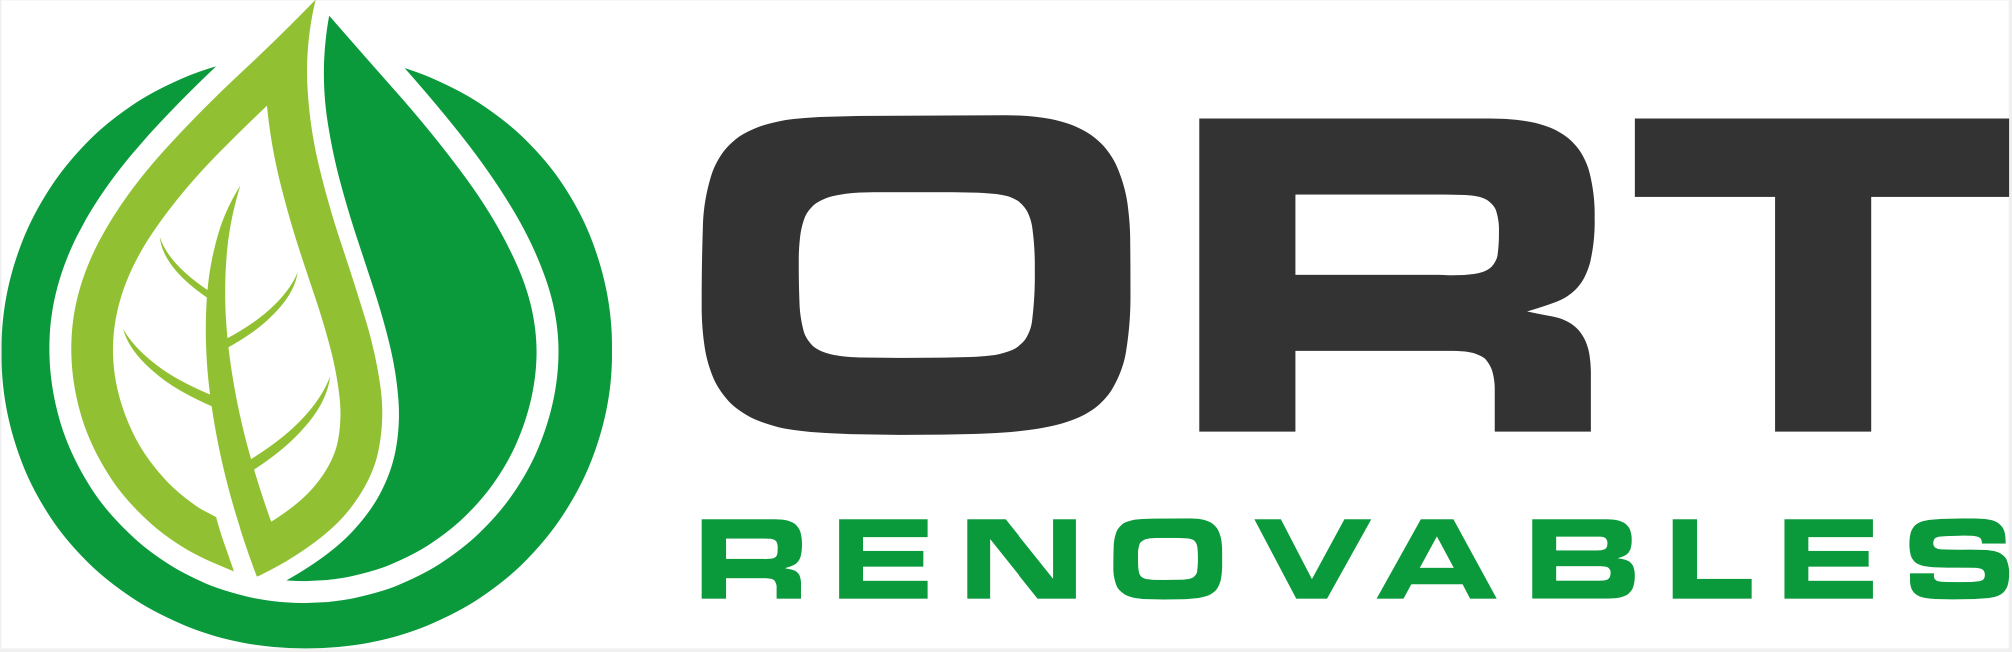 ort-renovables-logo-ok